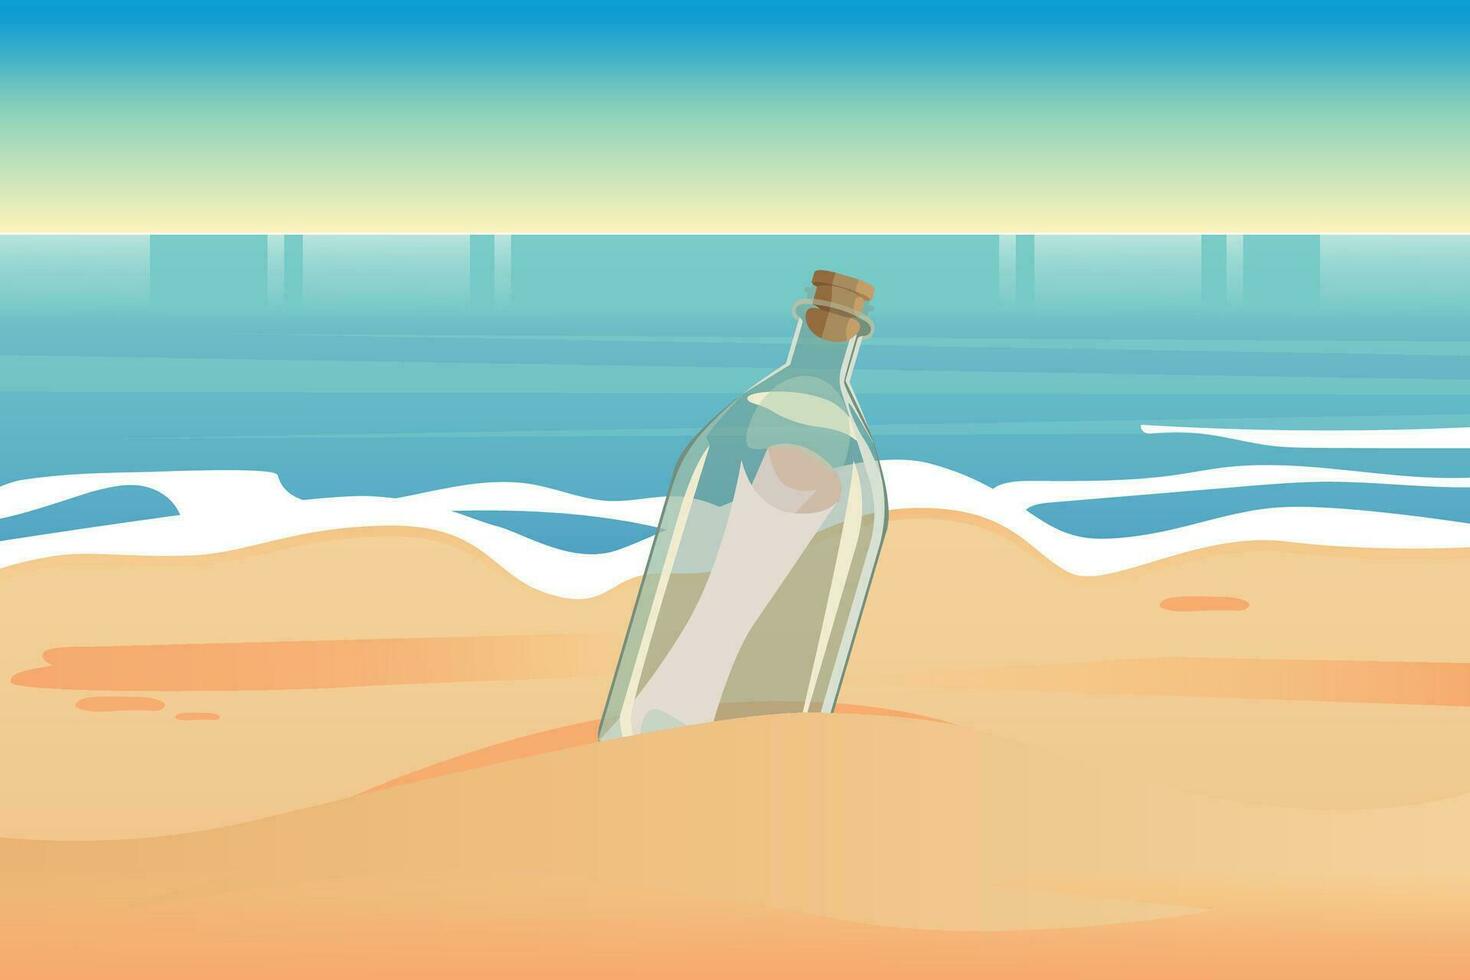 Message in the bottle stranded on the sand, vector illustration